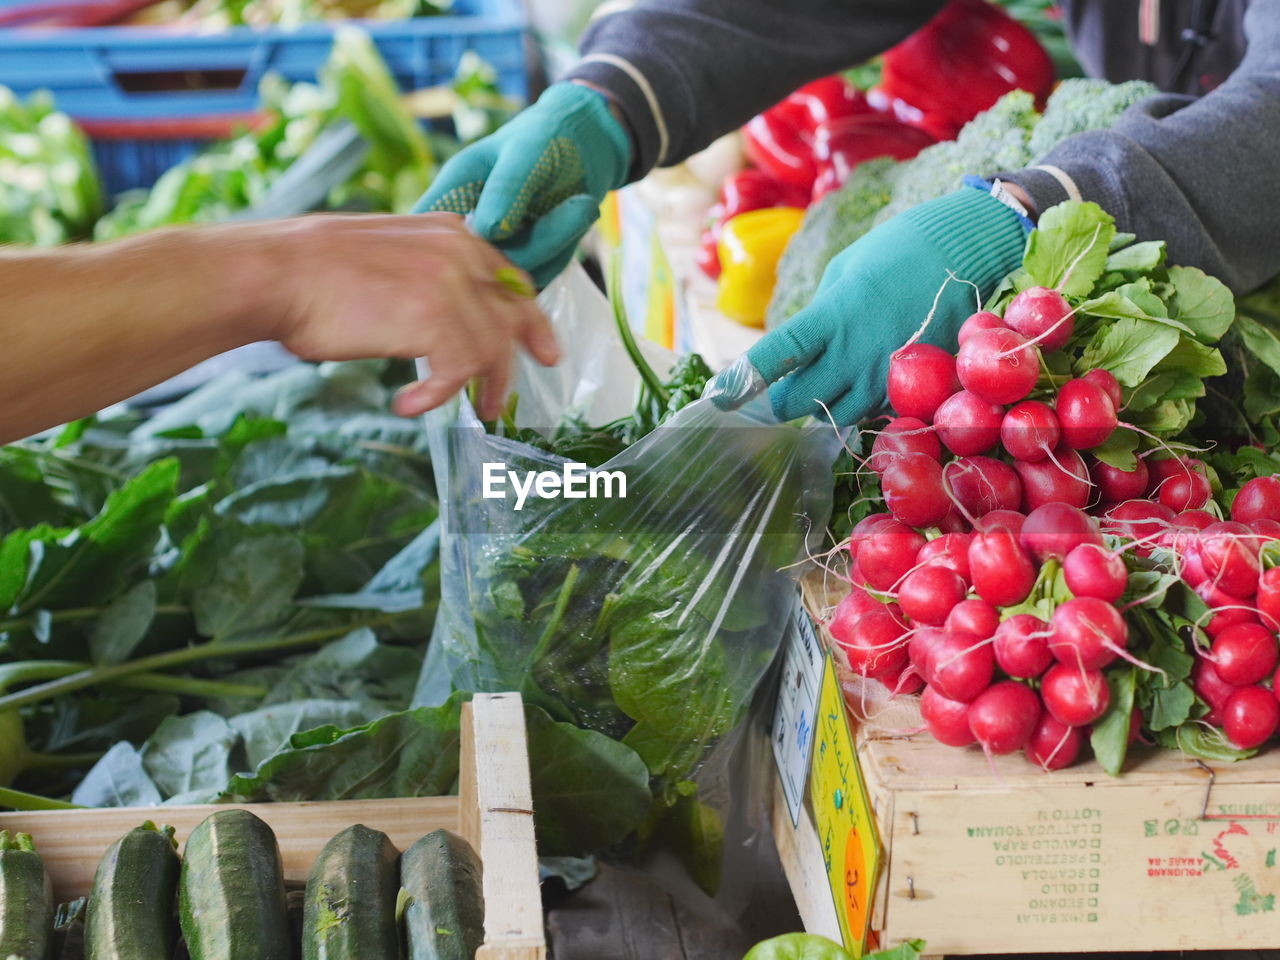 Cropped image of market vendor giving vegetables to customer